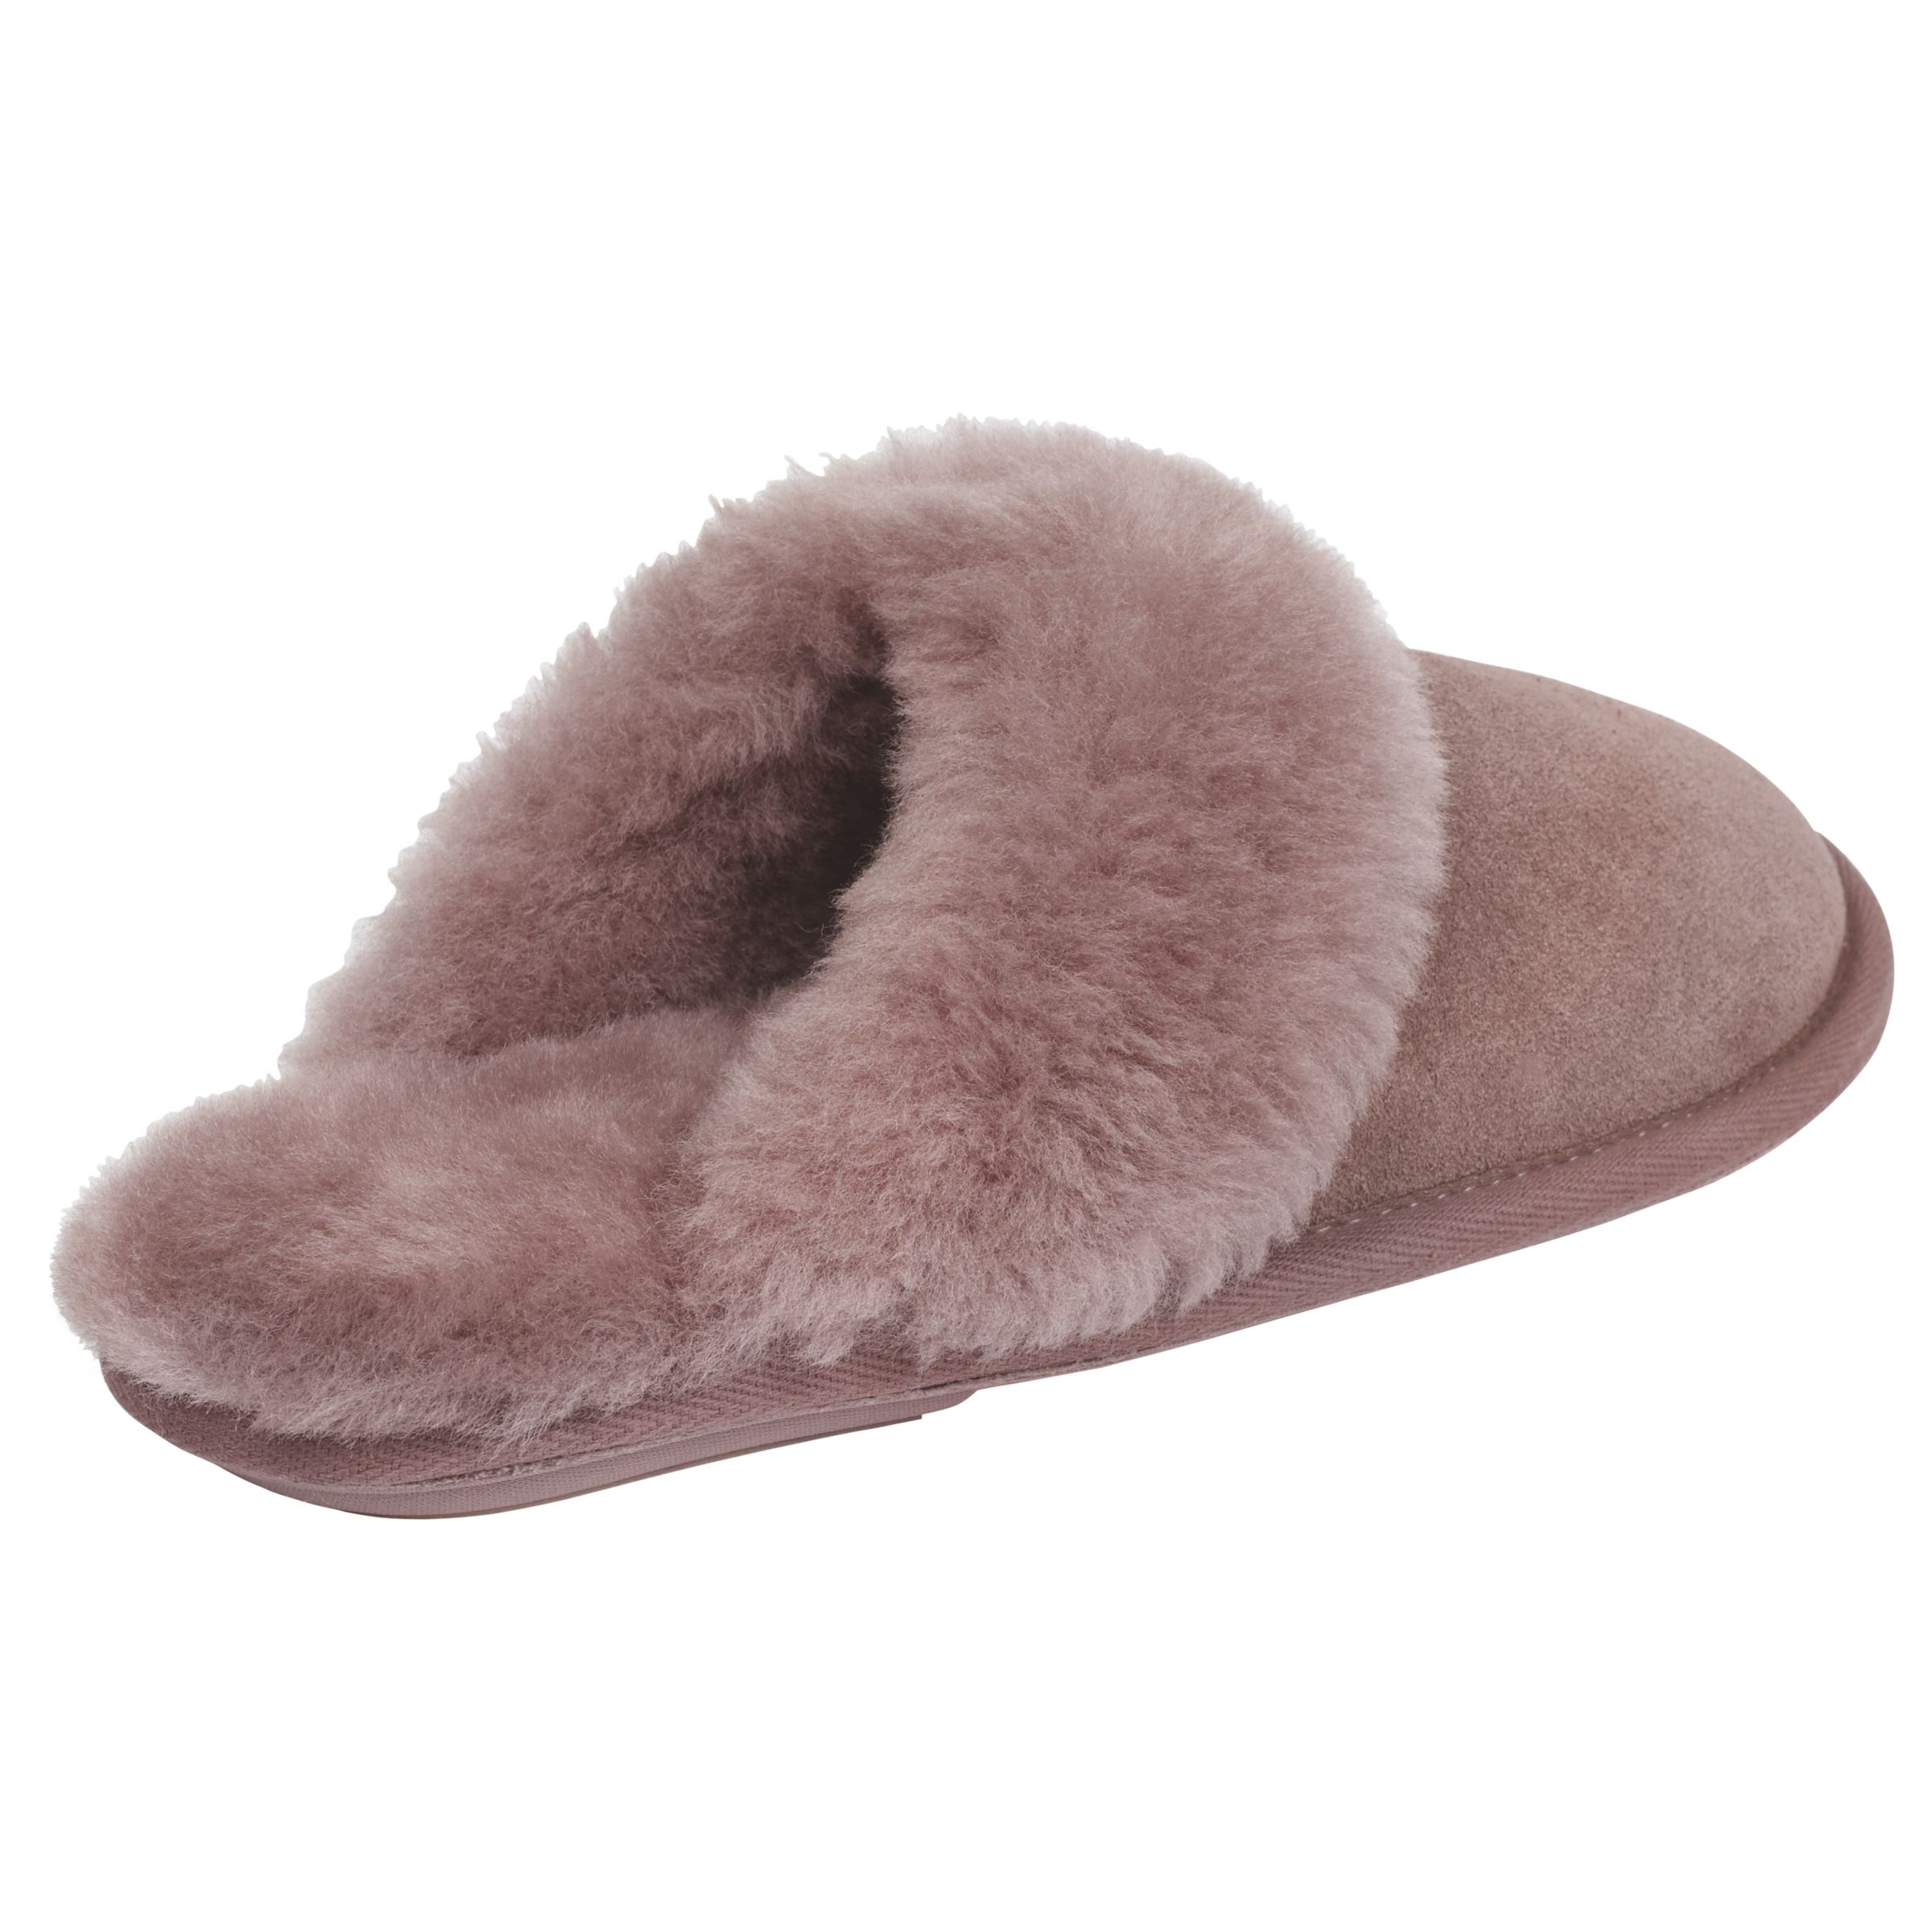 just sheepskin duchess slippers